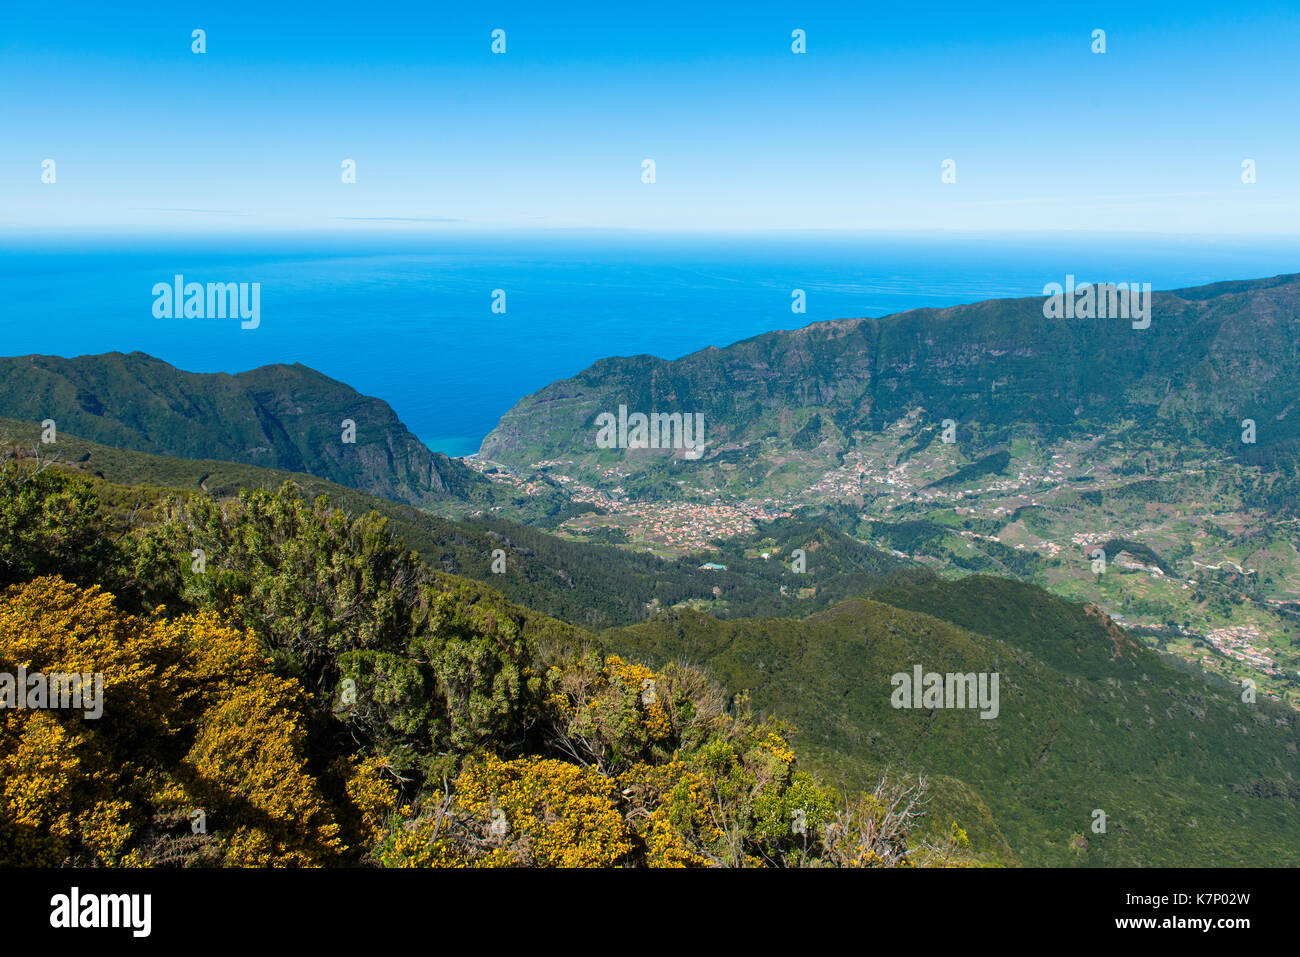 View to the Atlantic Ocean from the mountain Bica de Cana, plateau Paul da Serra, island Madeira, Portugal Stock Photo